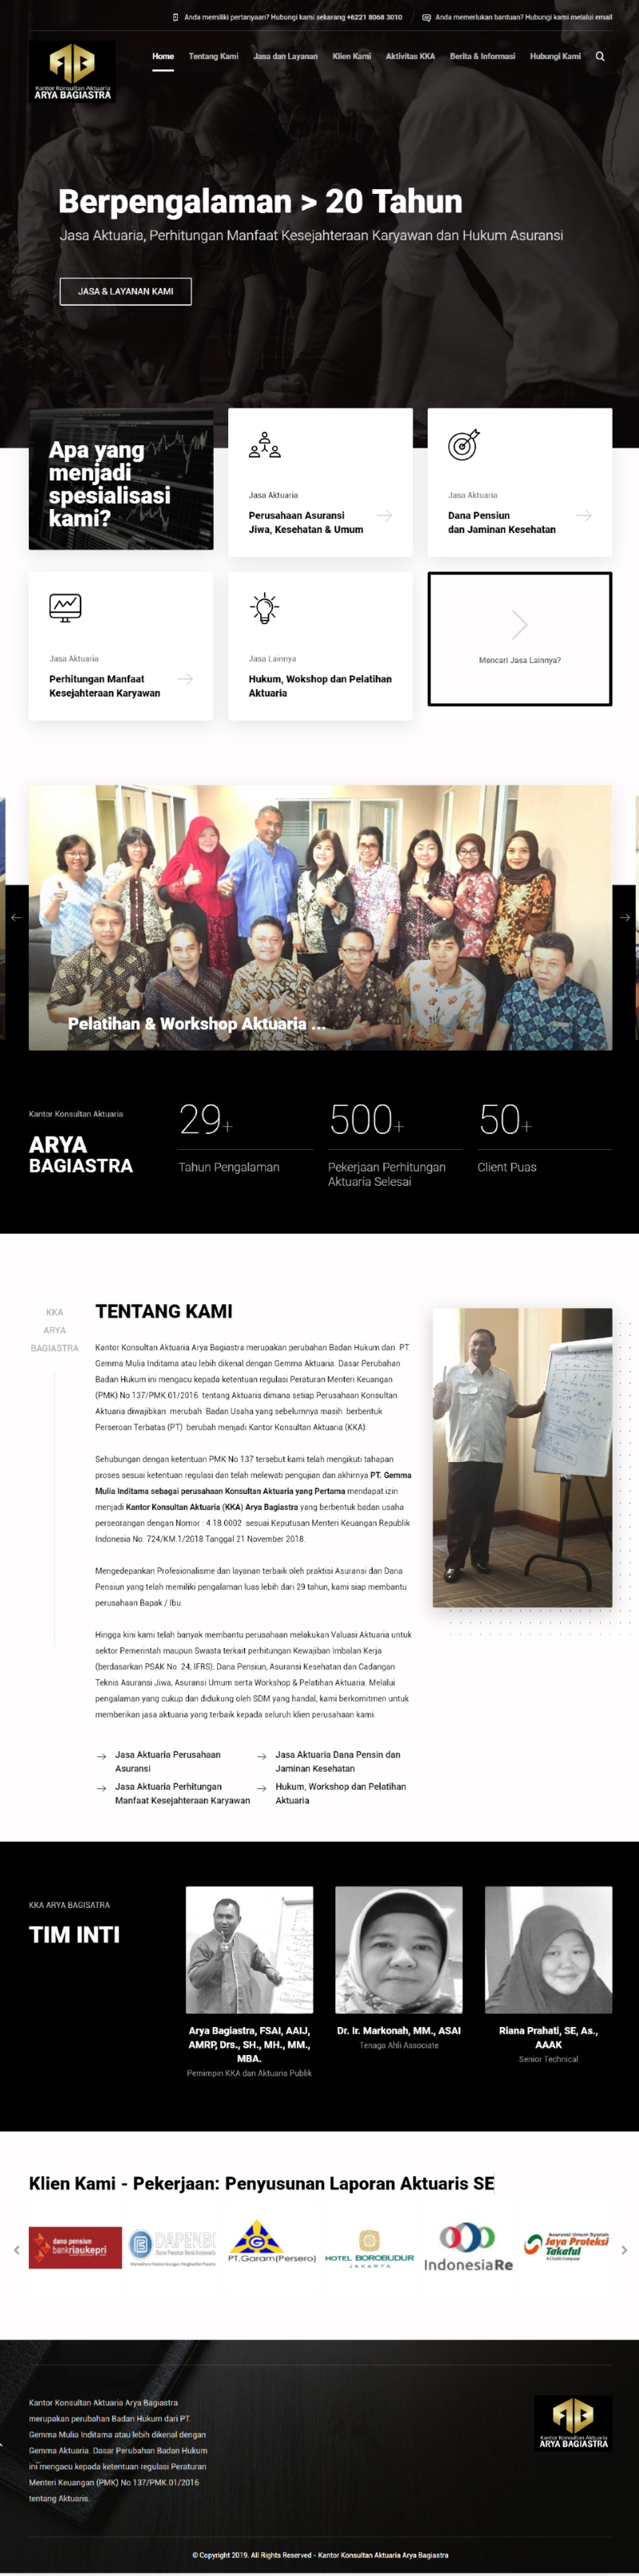 Corporate Website - KKA Arya Bagiastra - Full Screenshot of Arya Bagiastra's corporate website - a project by Data Polis Indonesia